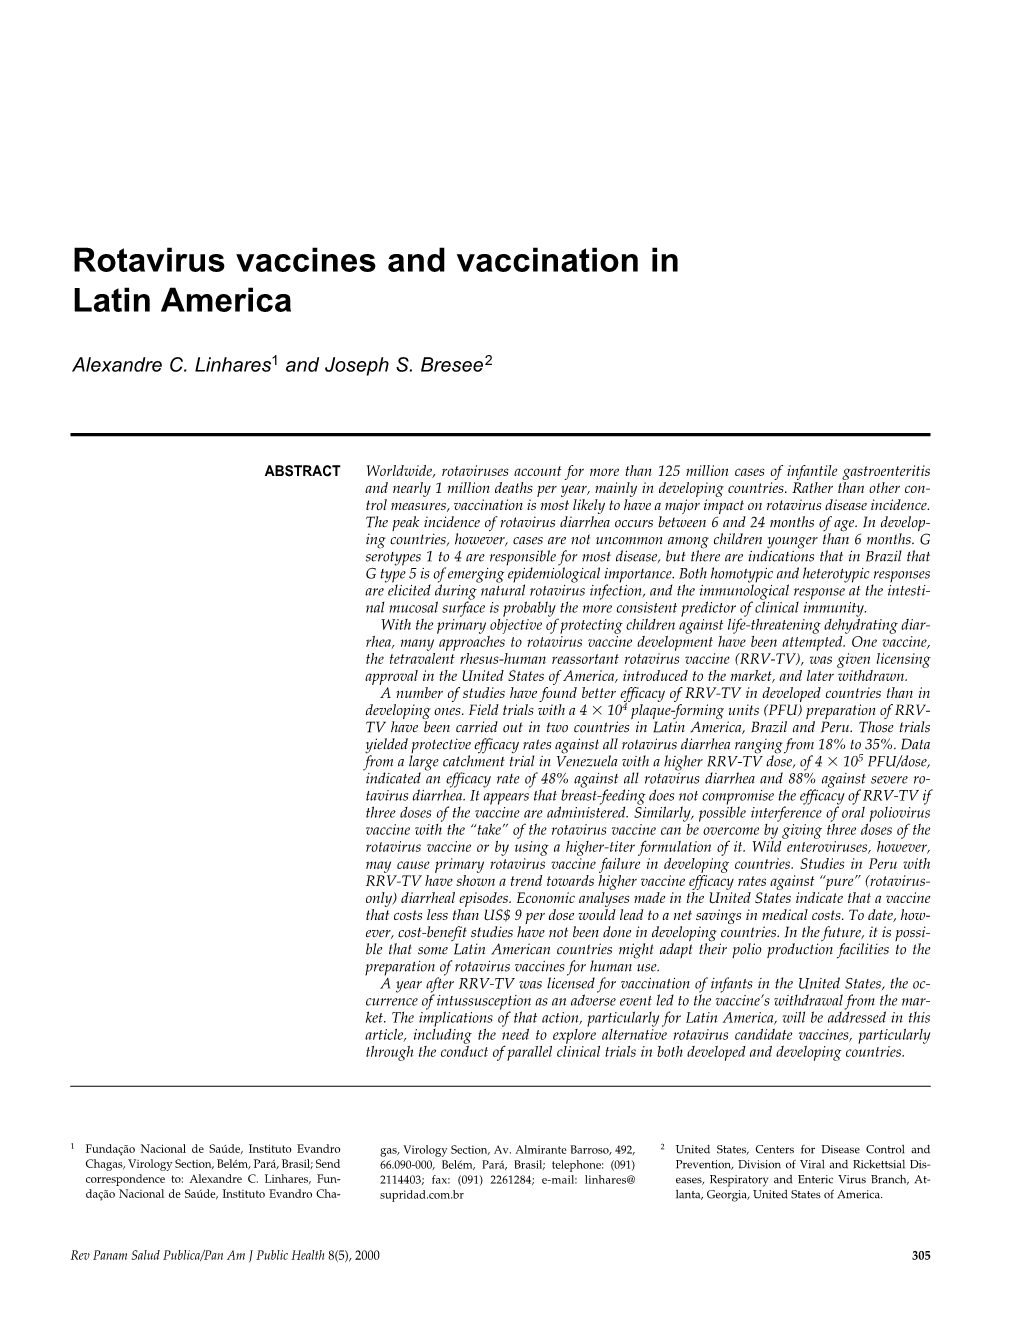 Rotavirus Vaccines and Vaccination in Latin America